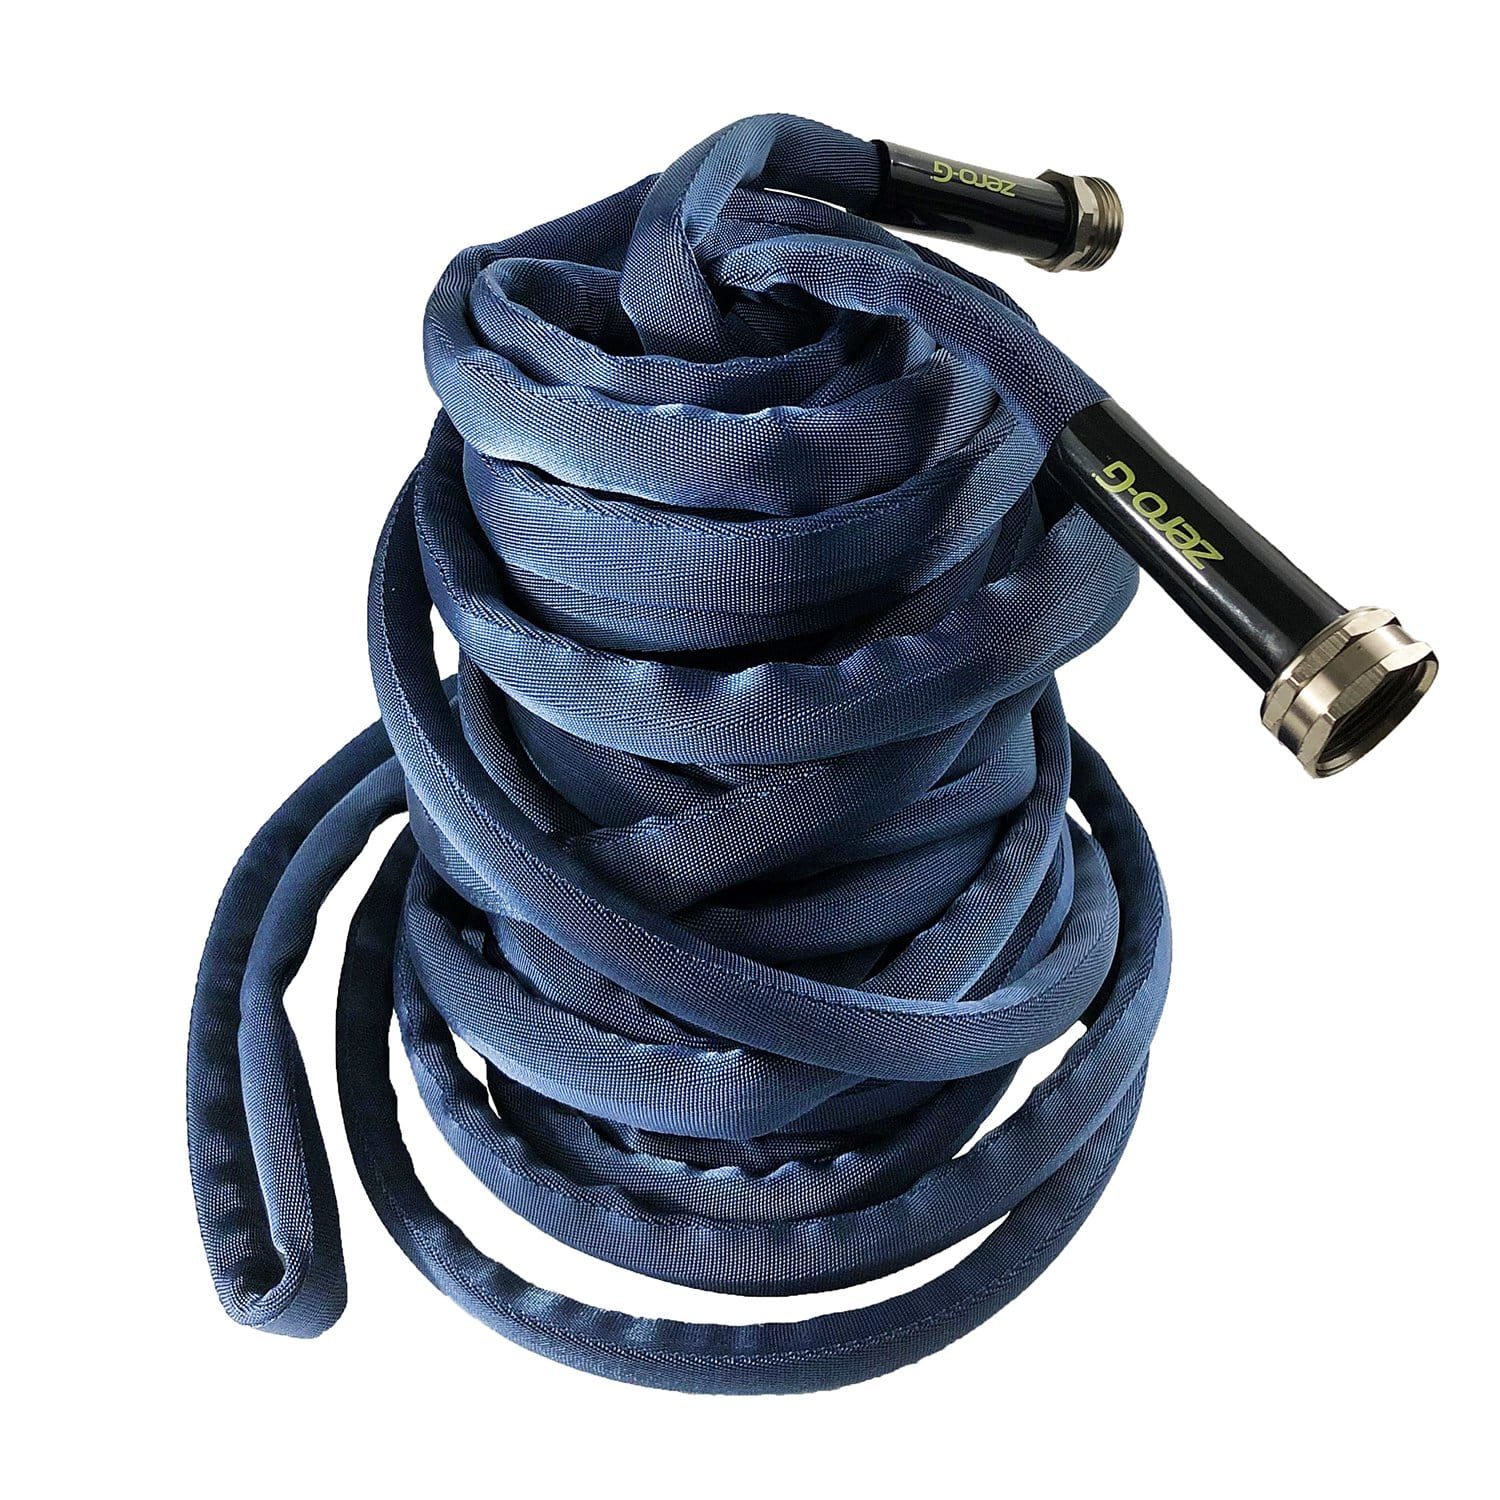 Teknor Apex 4006-50 Zero-G Blue Fresh Water hose 1/2" x 50'